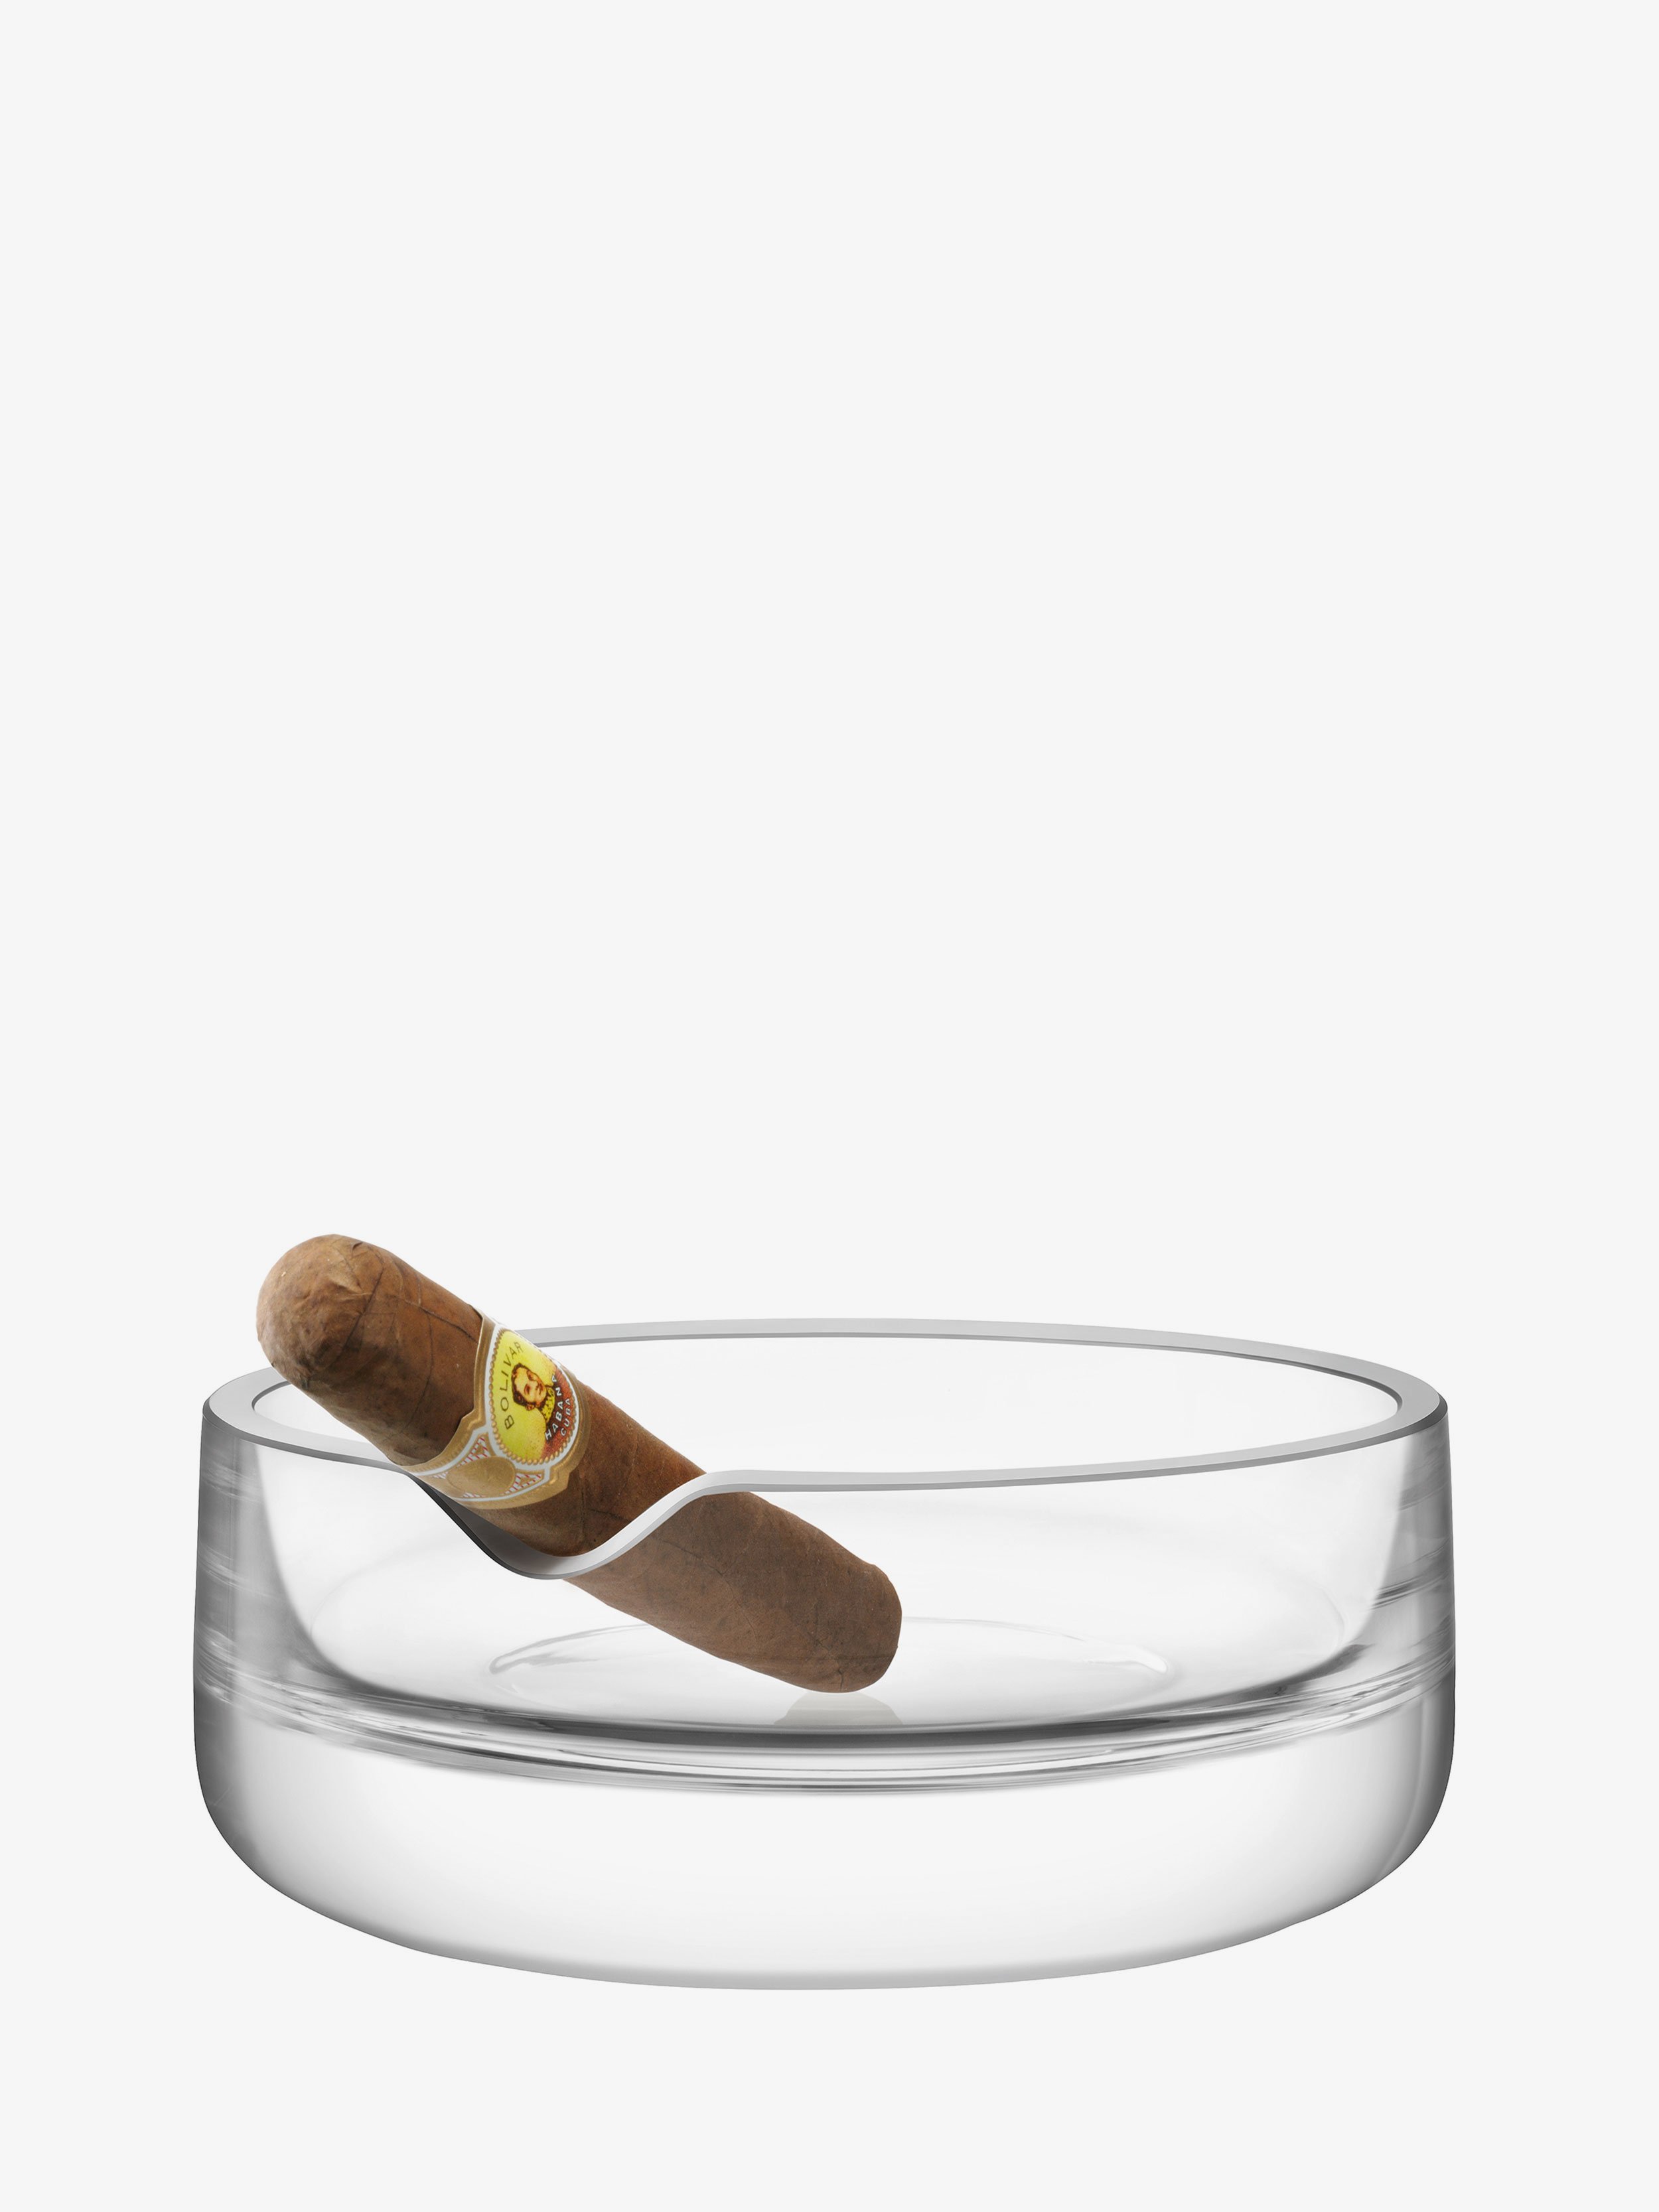 Cigar Ashtray H2.75in, Clear, Bar Culture